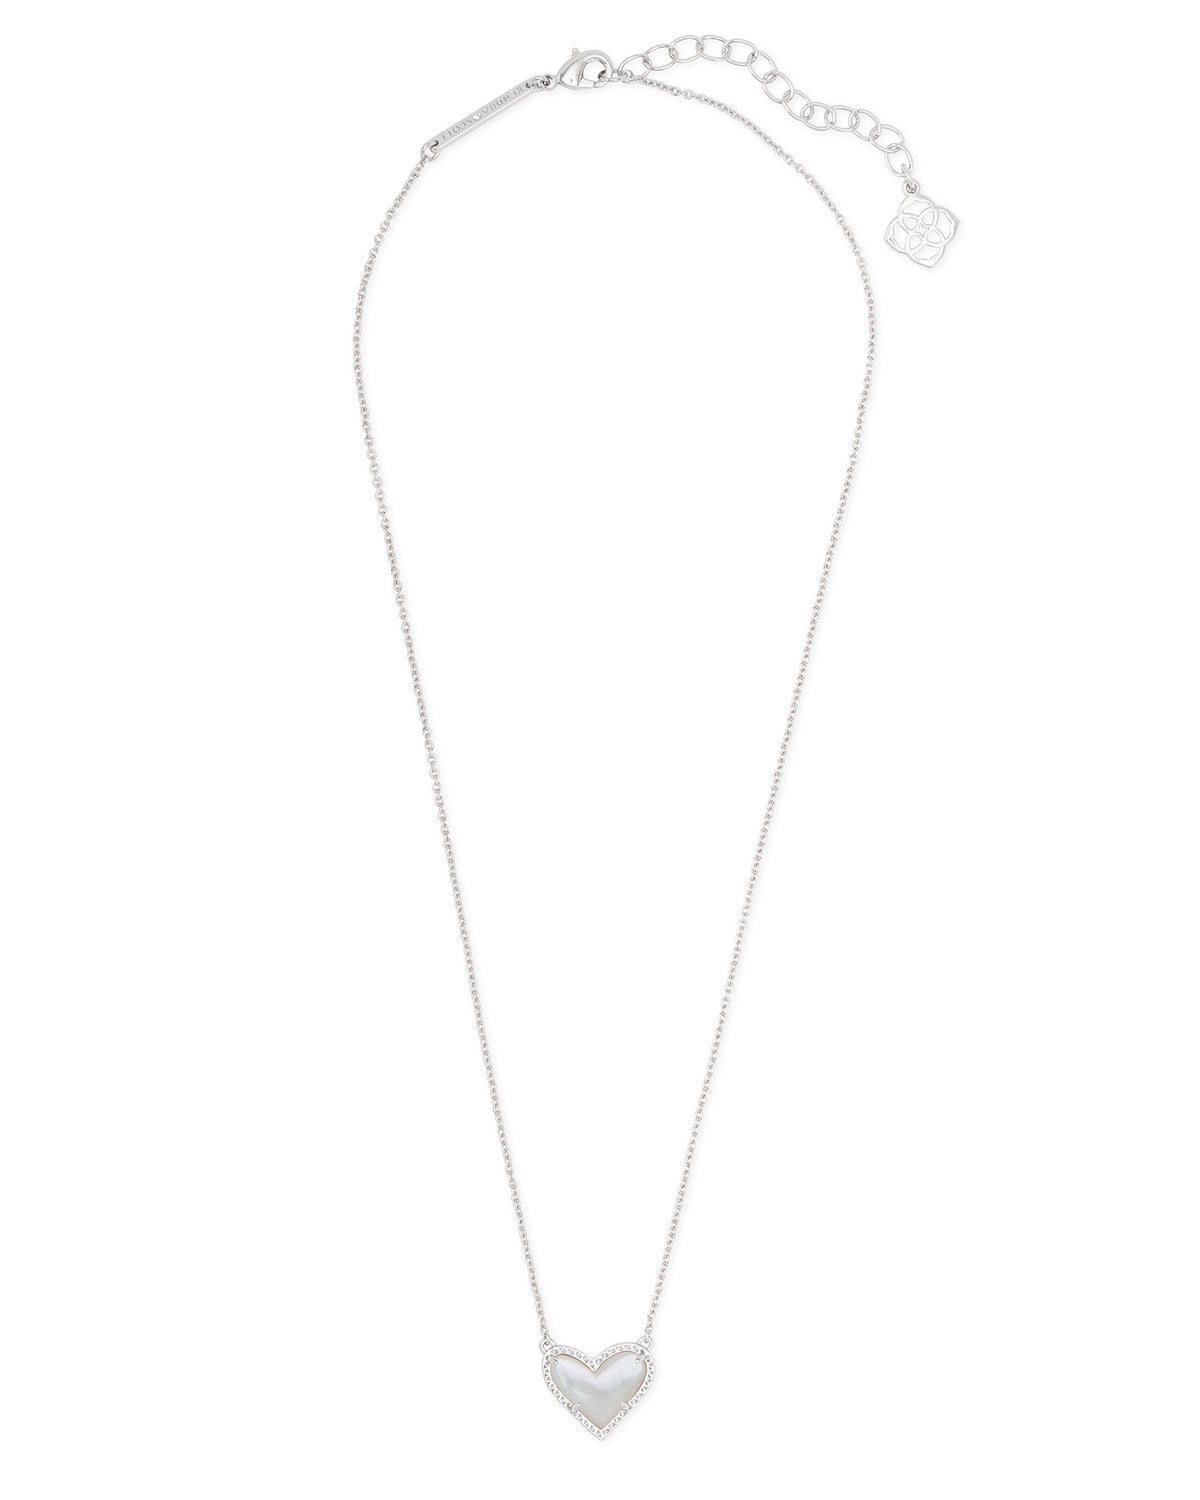 Ari Heart Short Pendant Necklace